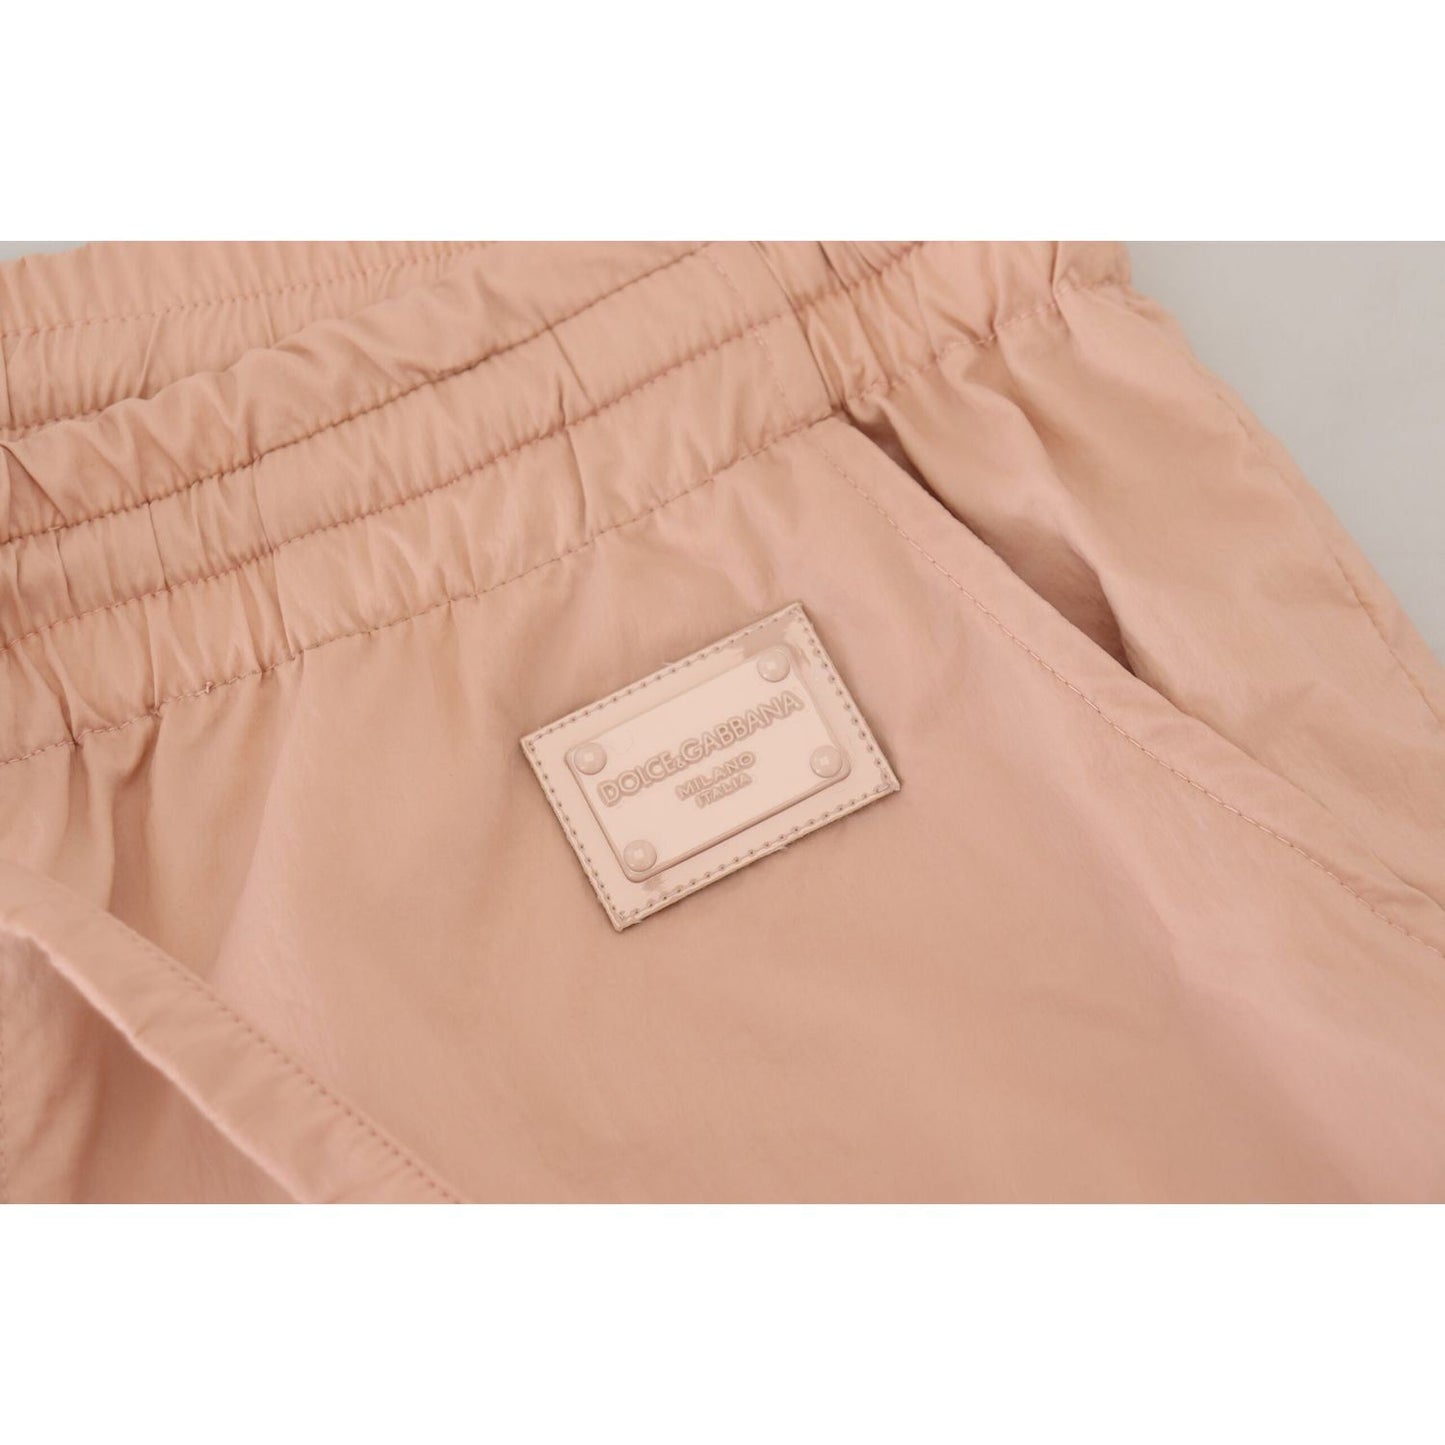 Dolce & GabbanaElegant Peach Casual SweatpantsMcRichard Designer Brands£459.00